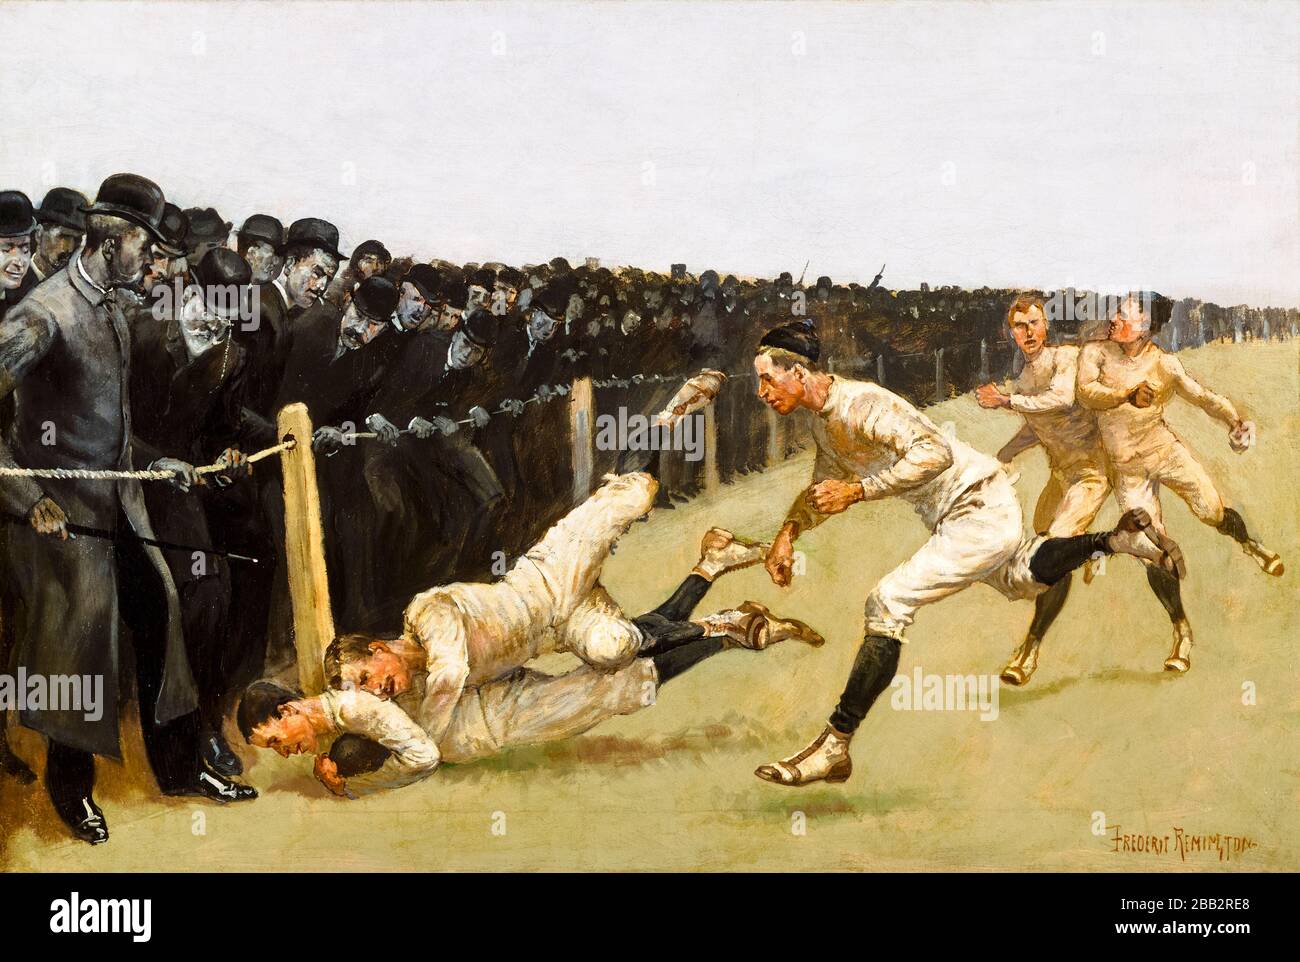 Touchdown, Yale vs. Princeton, Thanksgiving Day 27. November 1890, Yale 32 Princeton 0, (19. Jahrhundert, American Football Game), Gemälde von Frederic Remington, 1890-1899 Stockfoto